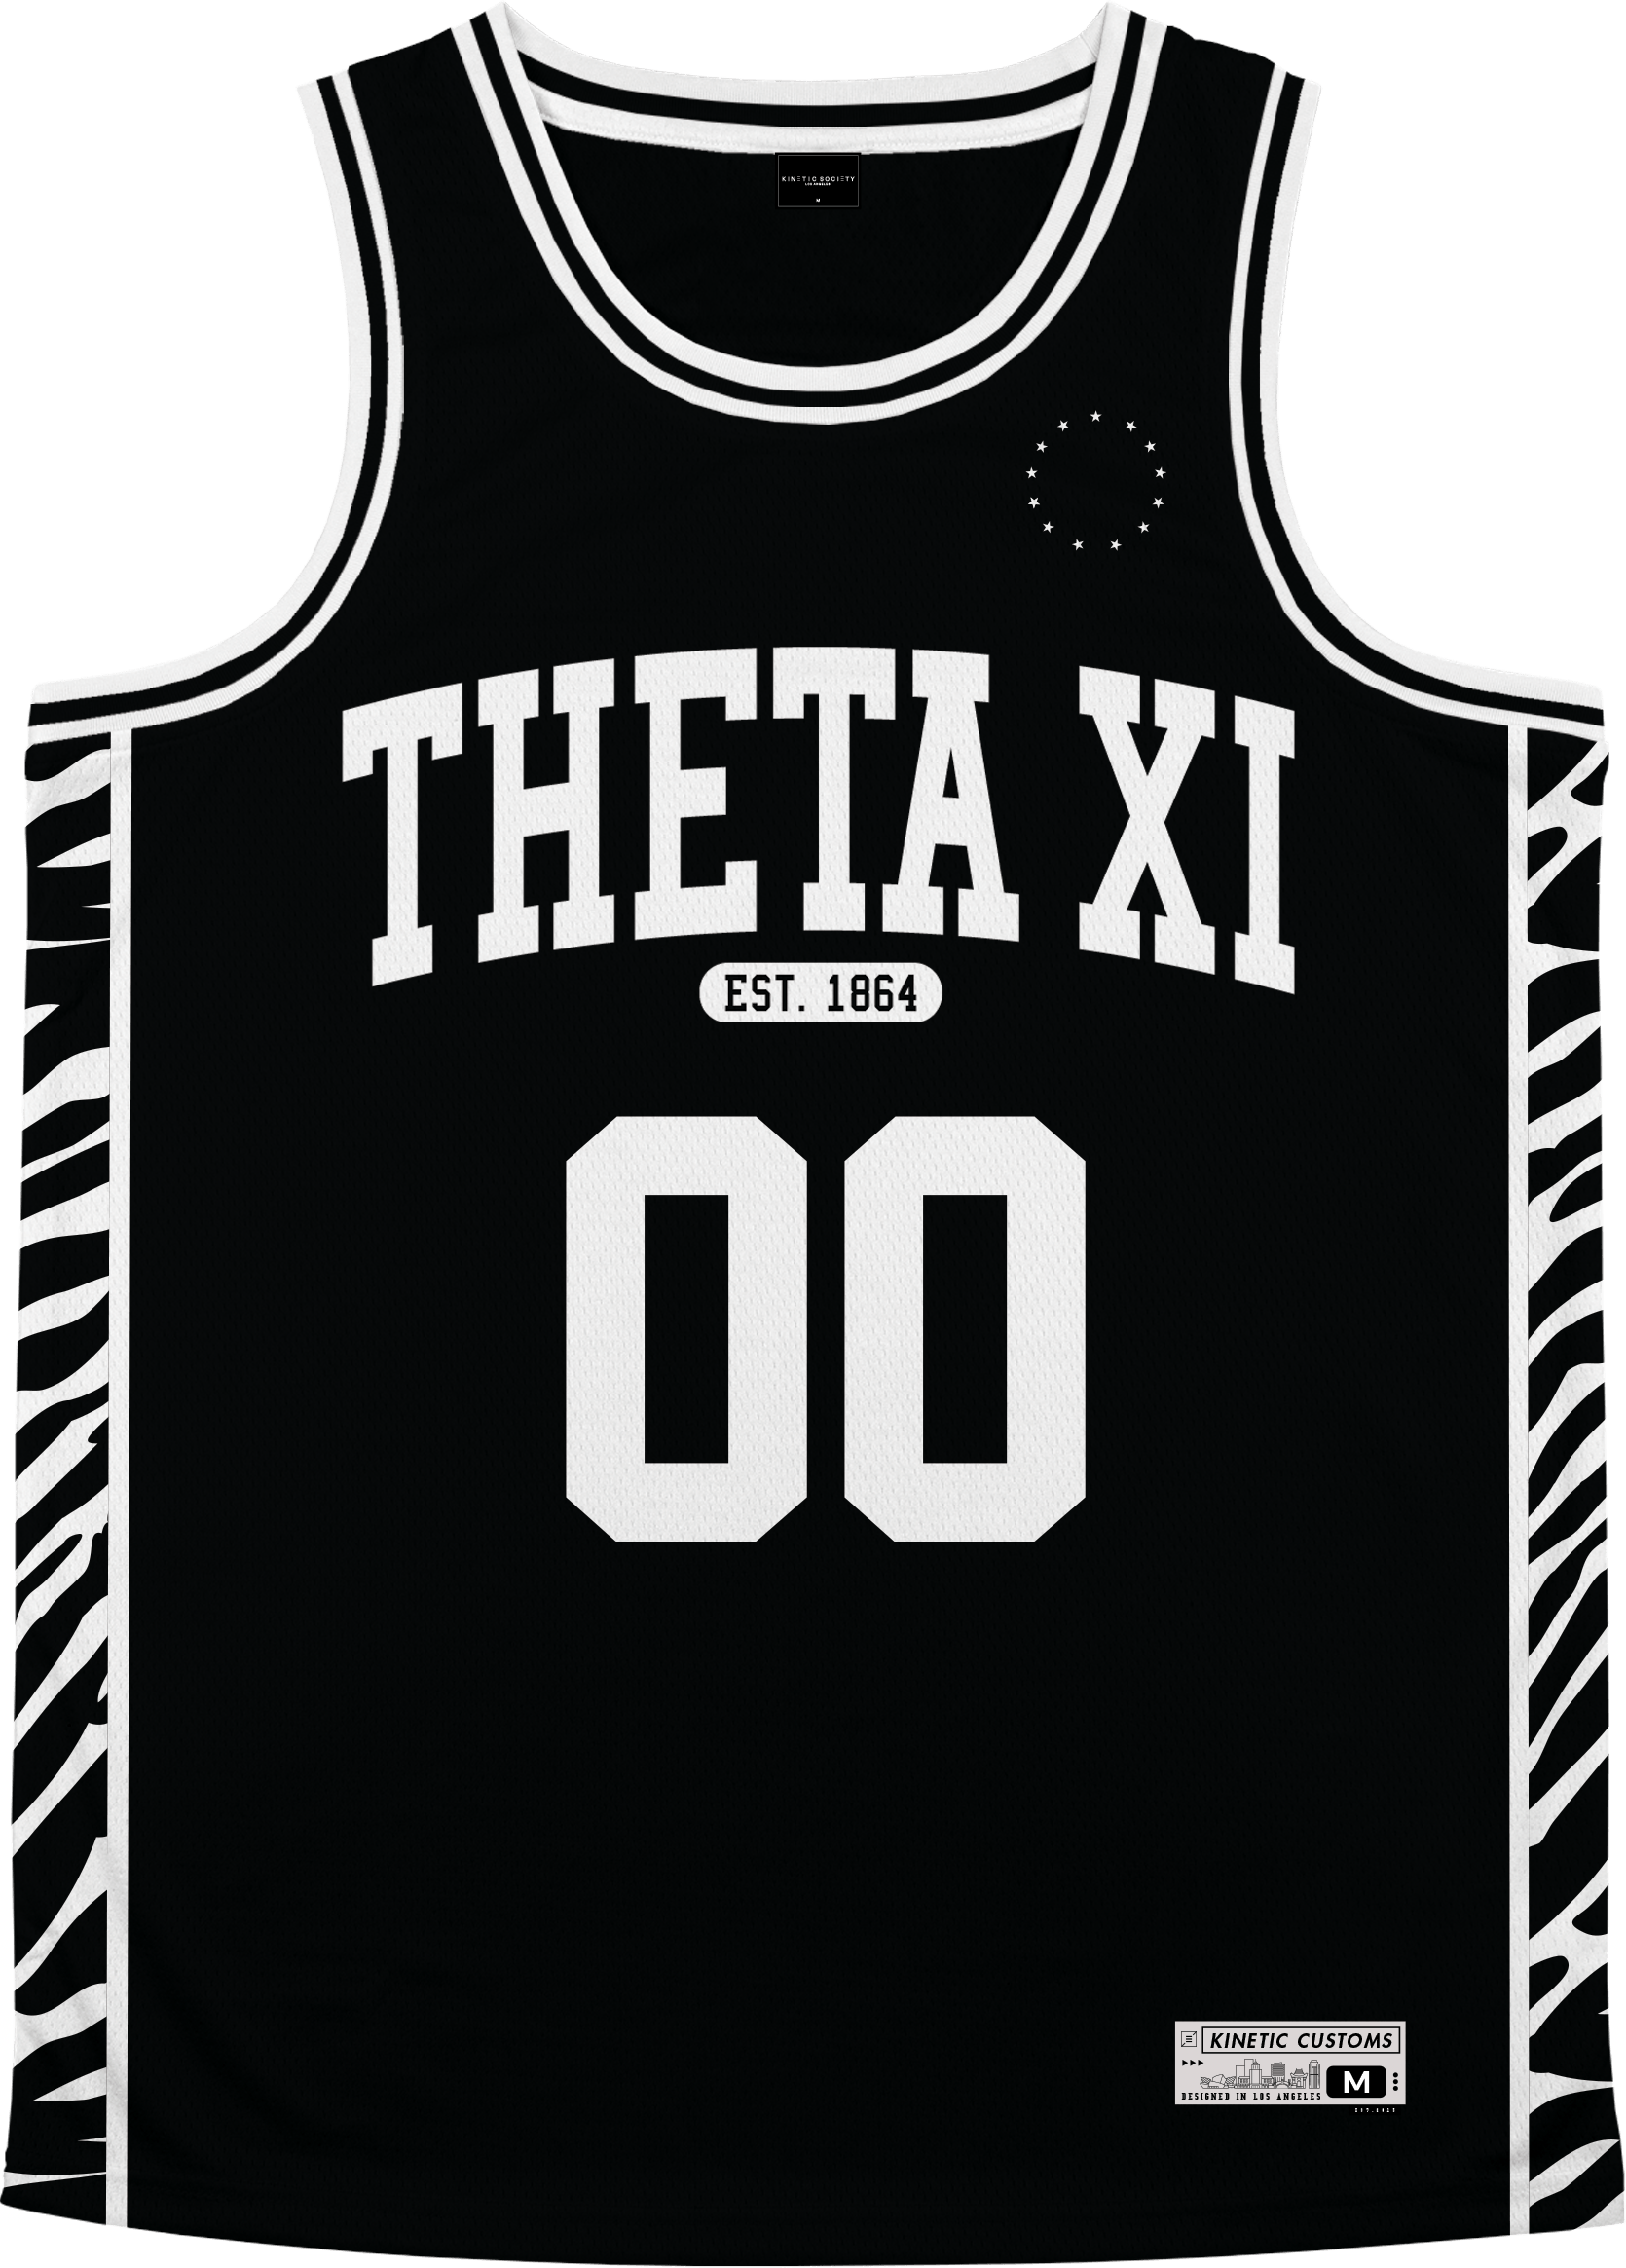 Theta Xi - Zebra Flex Basketball Jersey Premium Basketball Kinetic Society LLC 